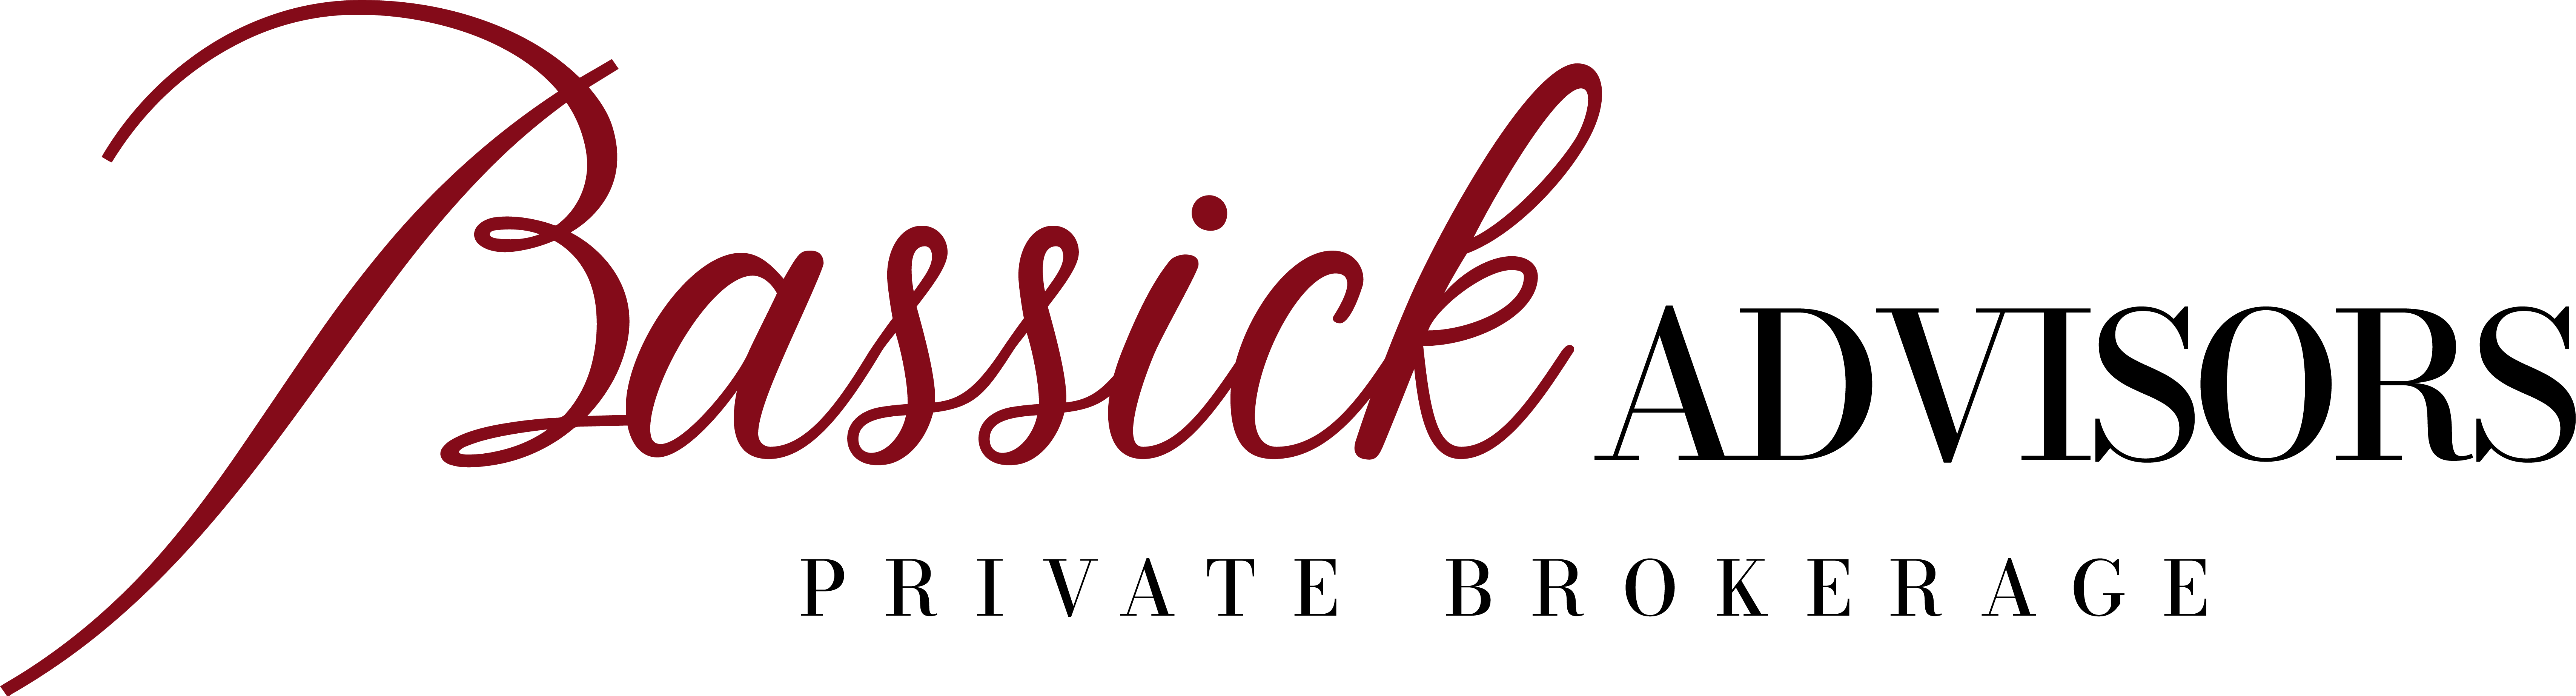 Bassick Advisors logo